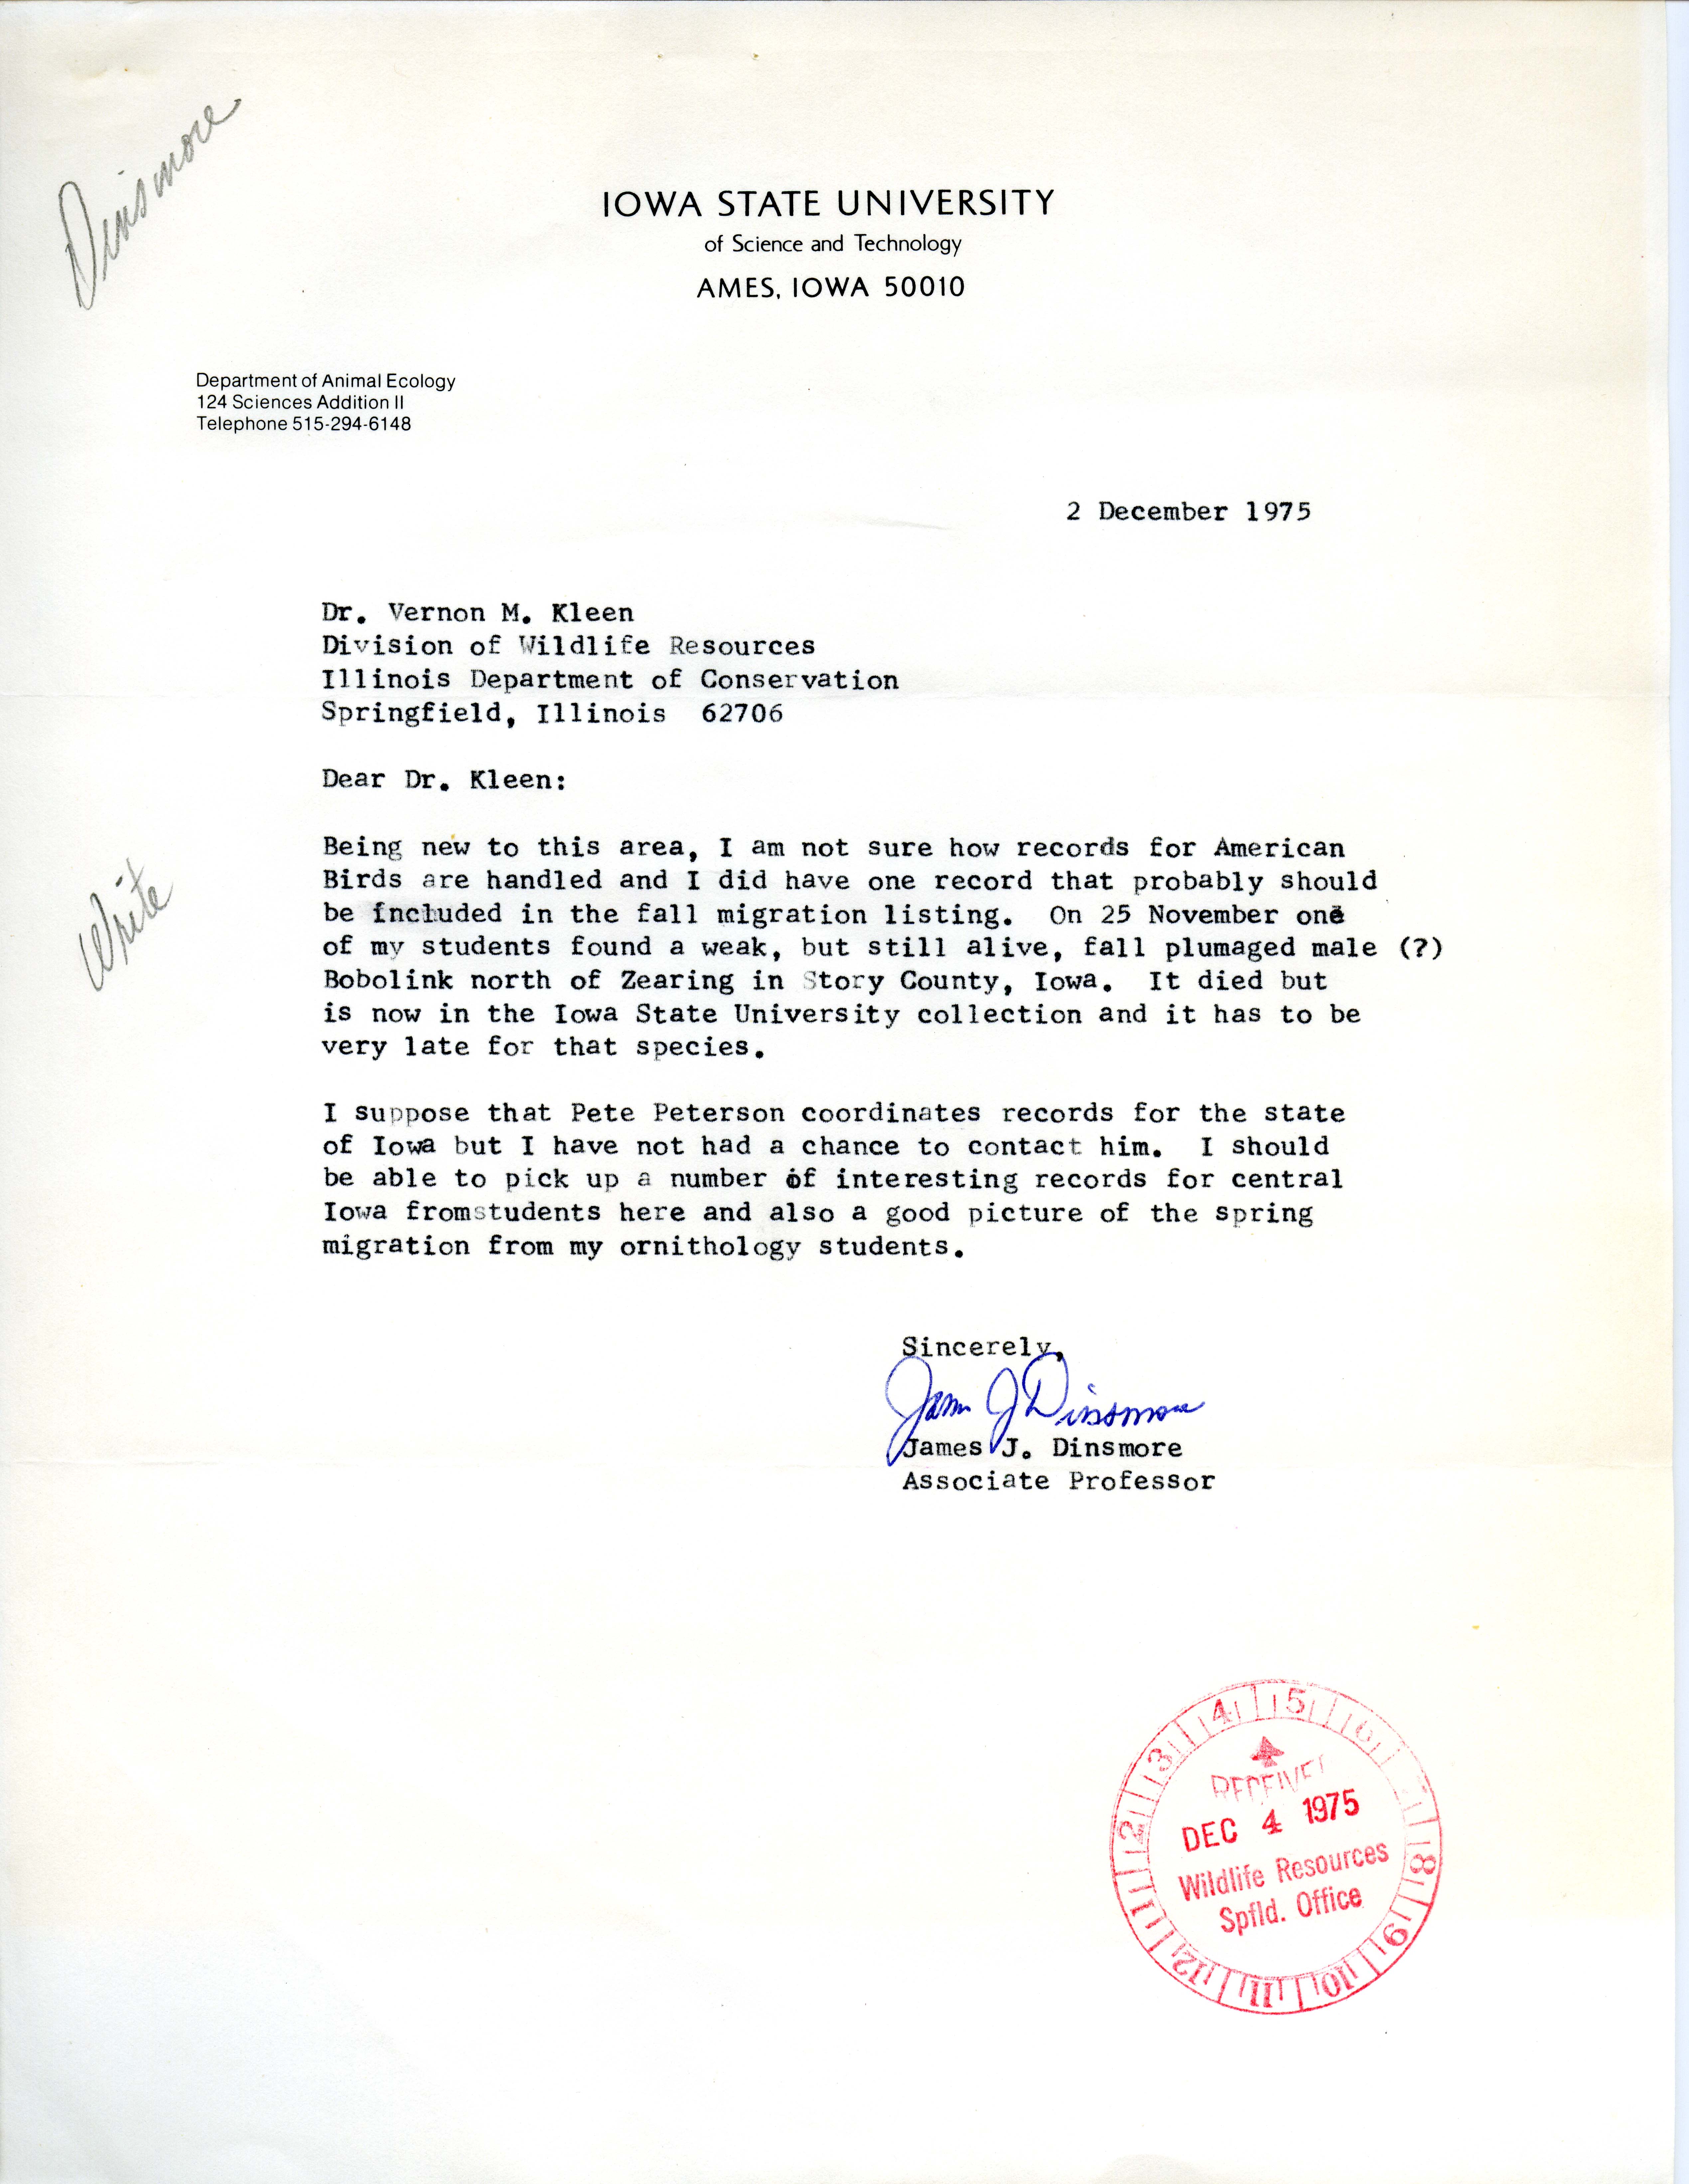 James J. Dinsmore letter to Vernon M. Kleen regarding submitting records for American birds, December 2, 1975